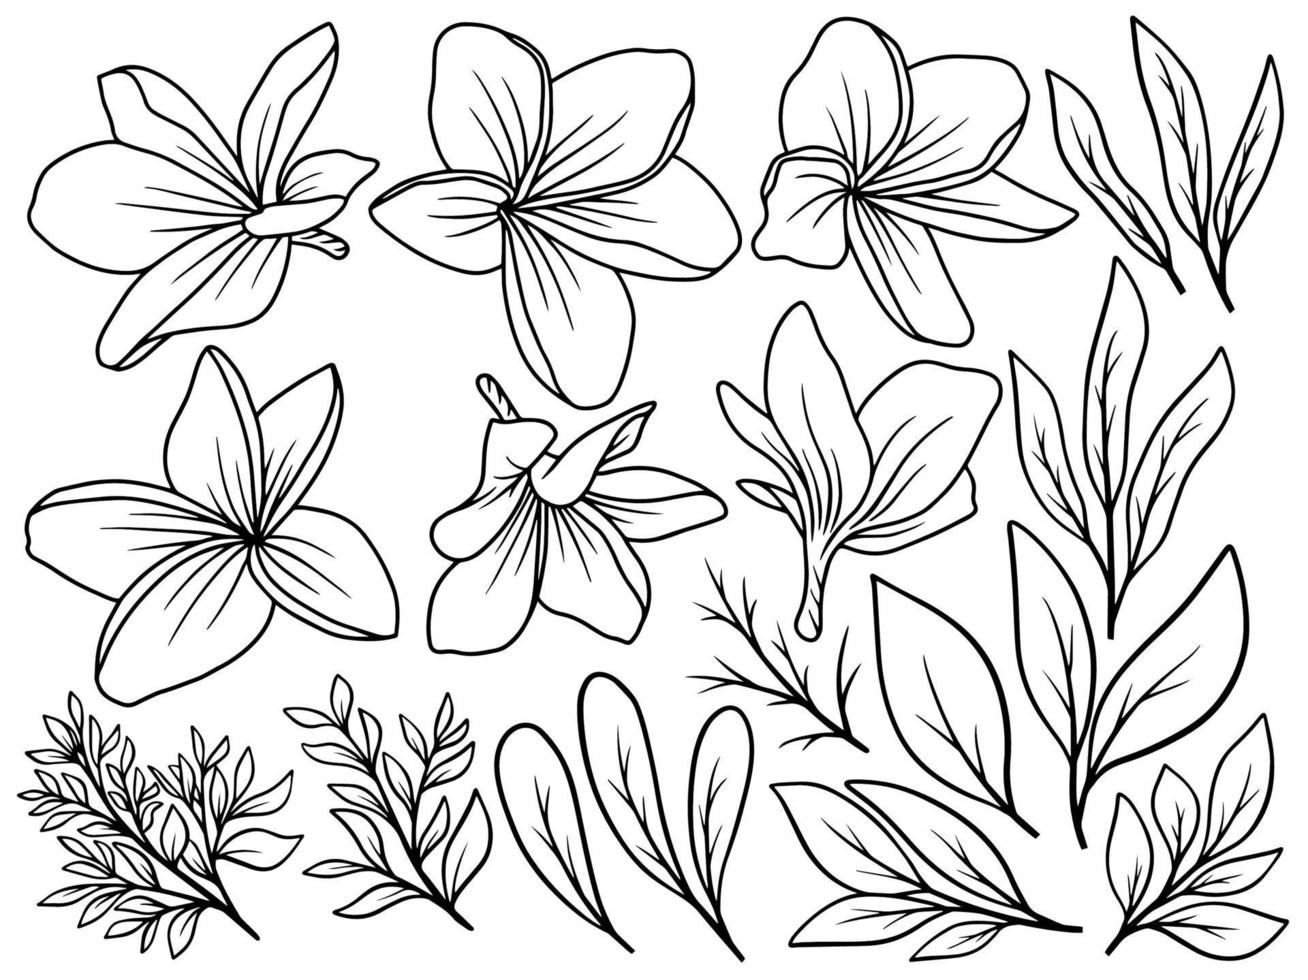 Flower line art arrangement vector